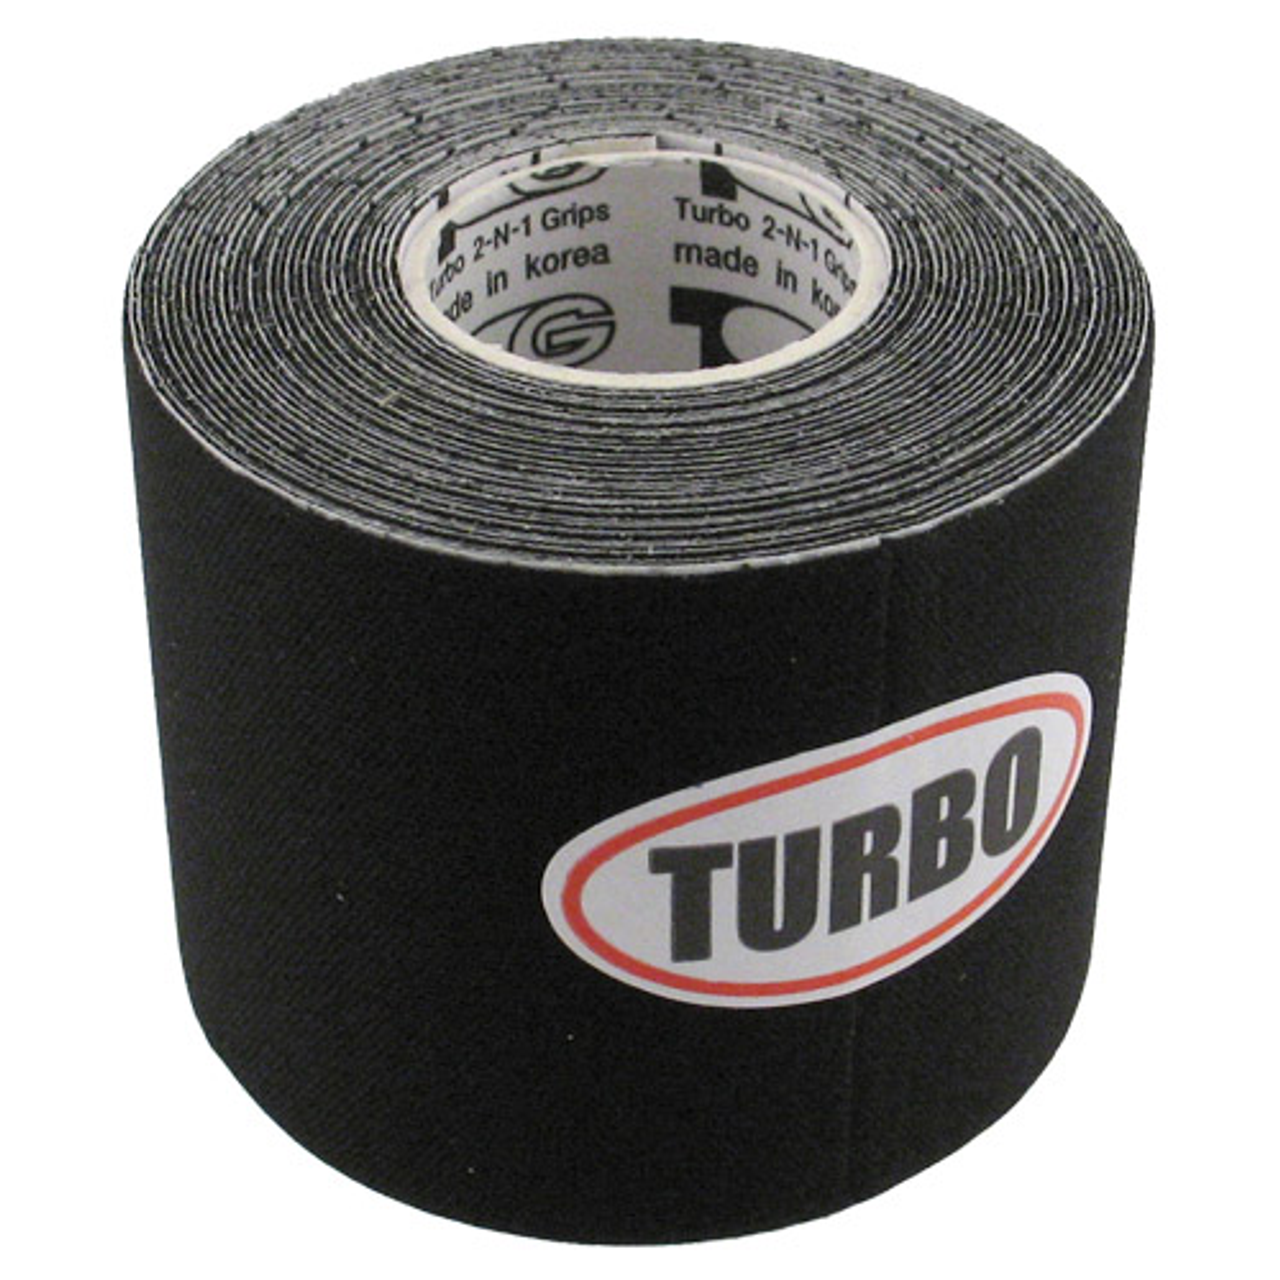 Turbo Patch Tape 2" Black Roll